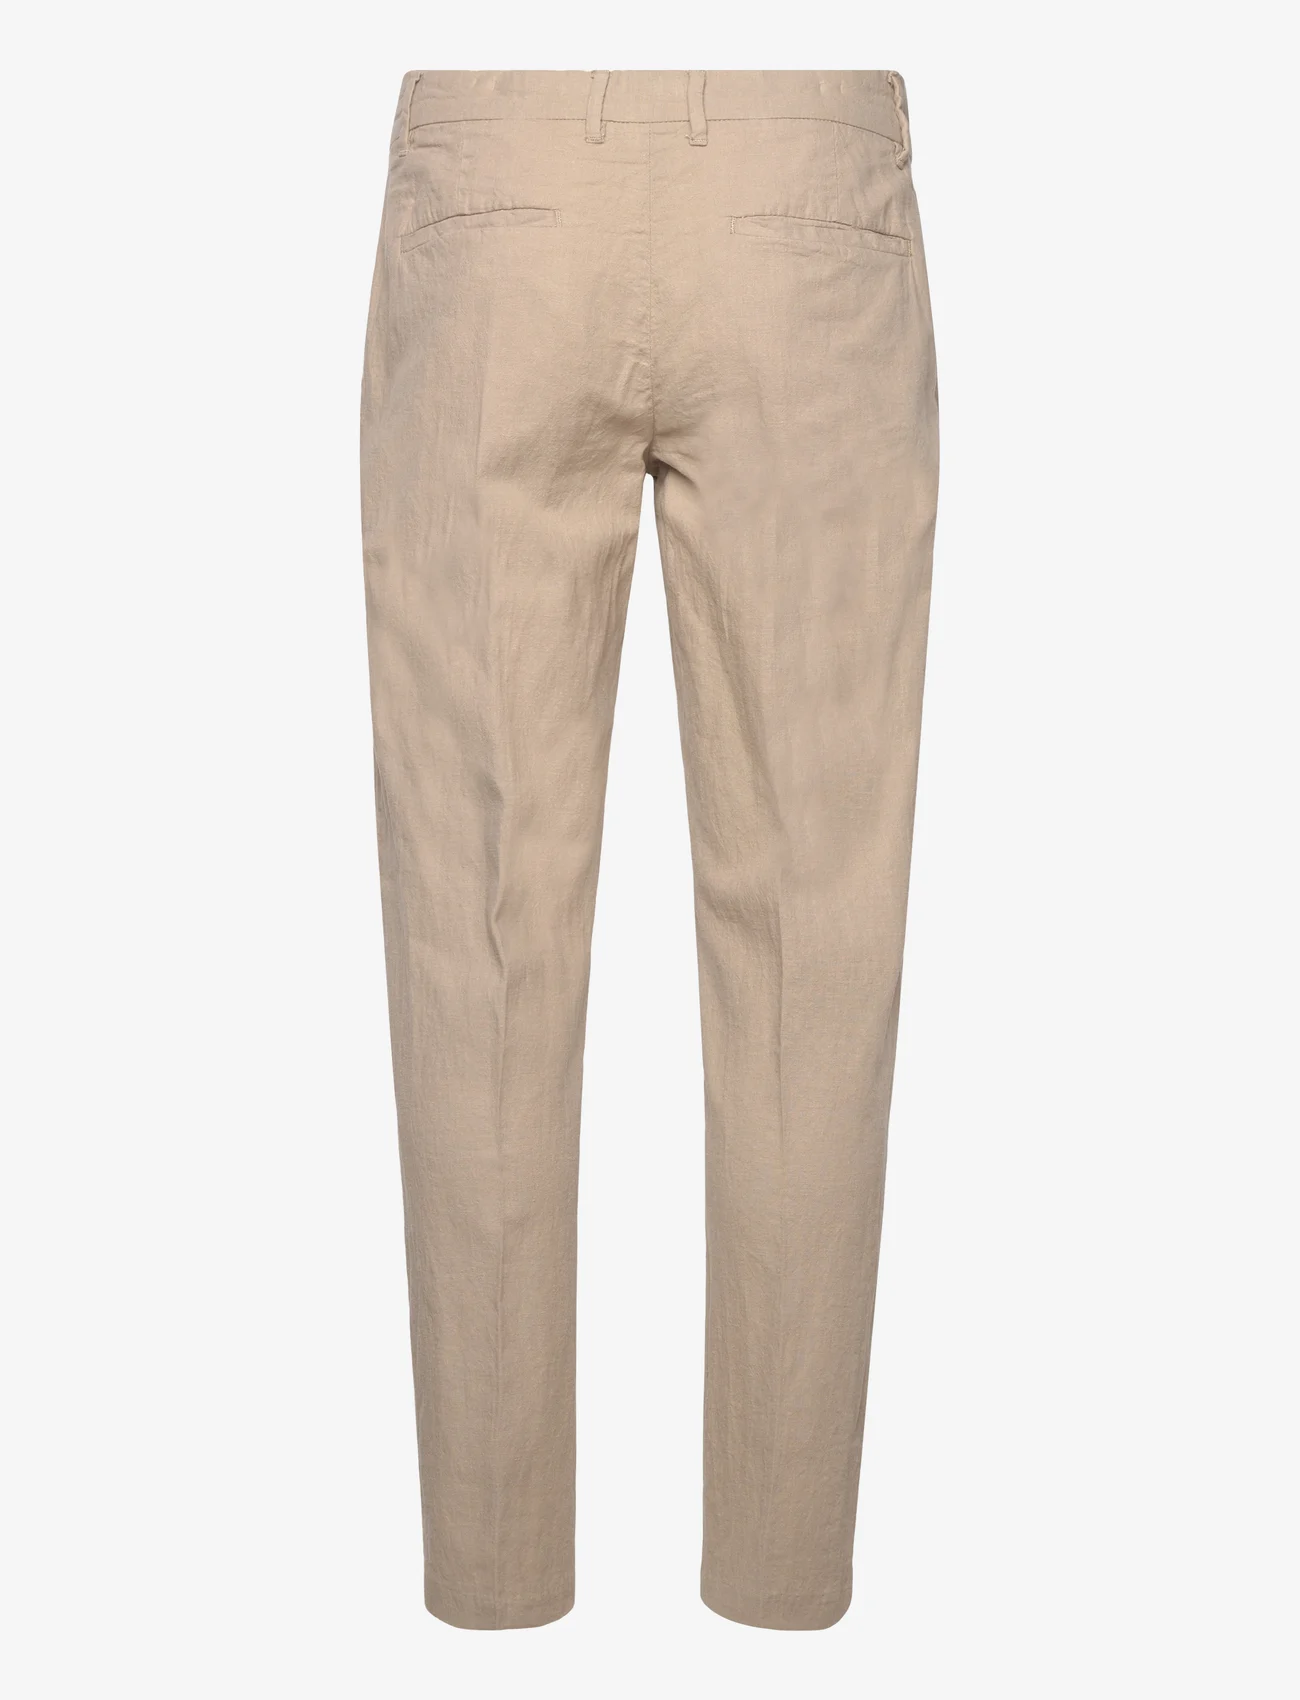 Lindbergh - Linen club pants - leinenhosen - sand - 1